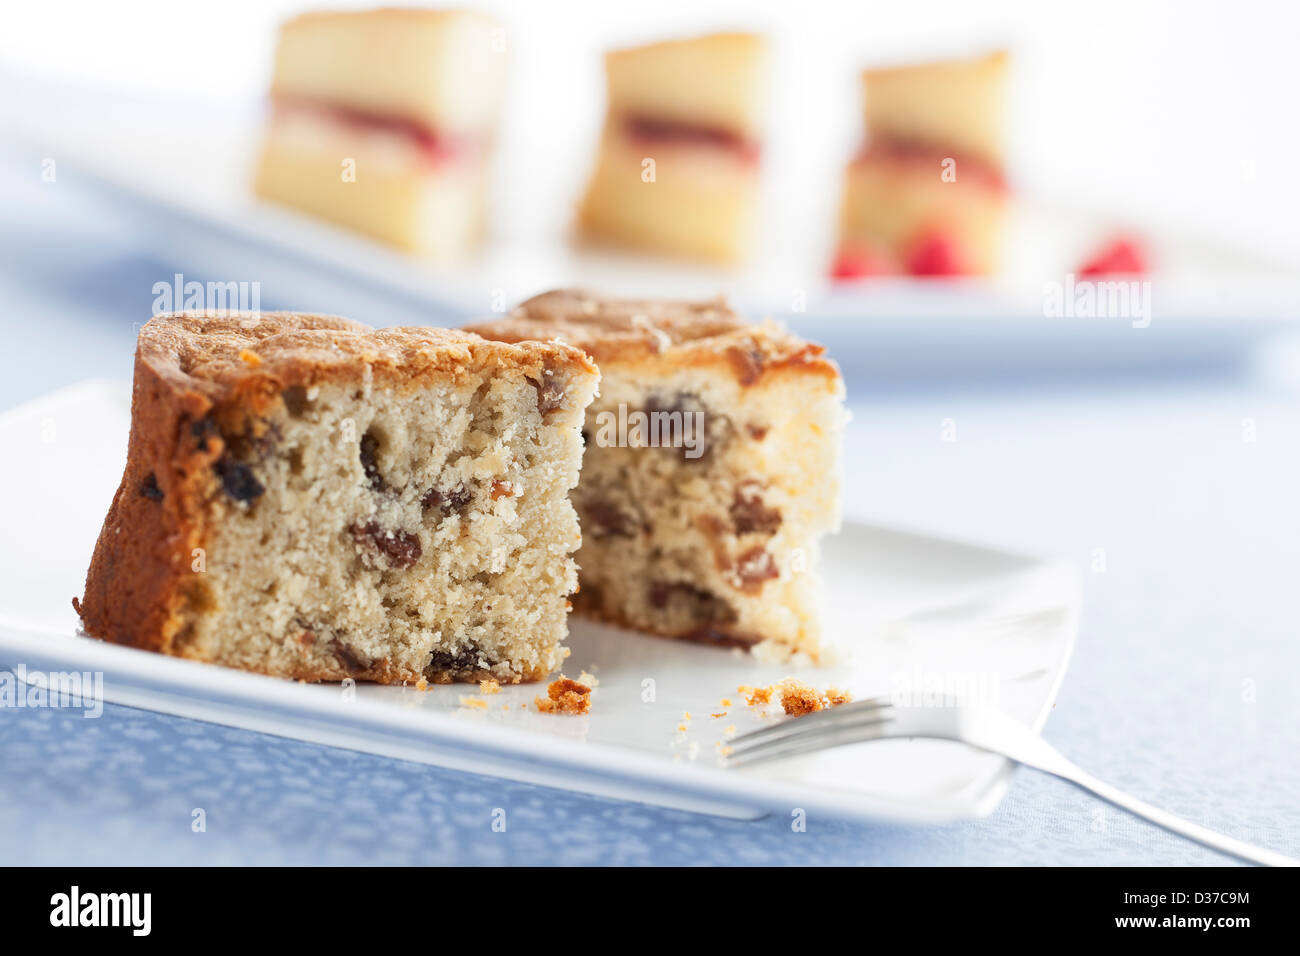 Wedge slice of fruitcake made with raisins Stock Photo